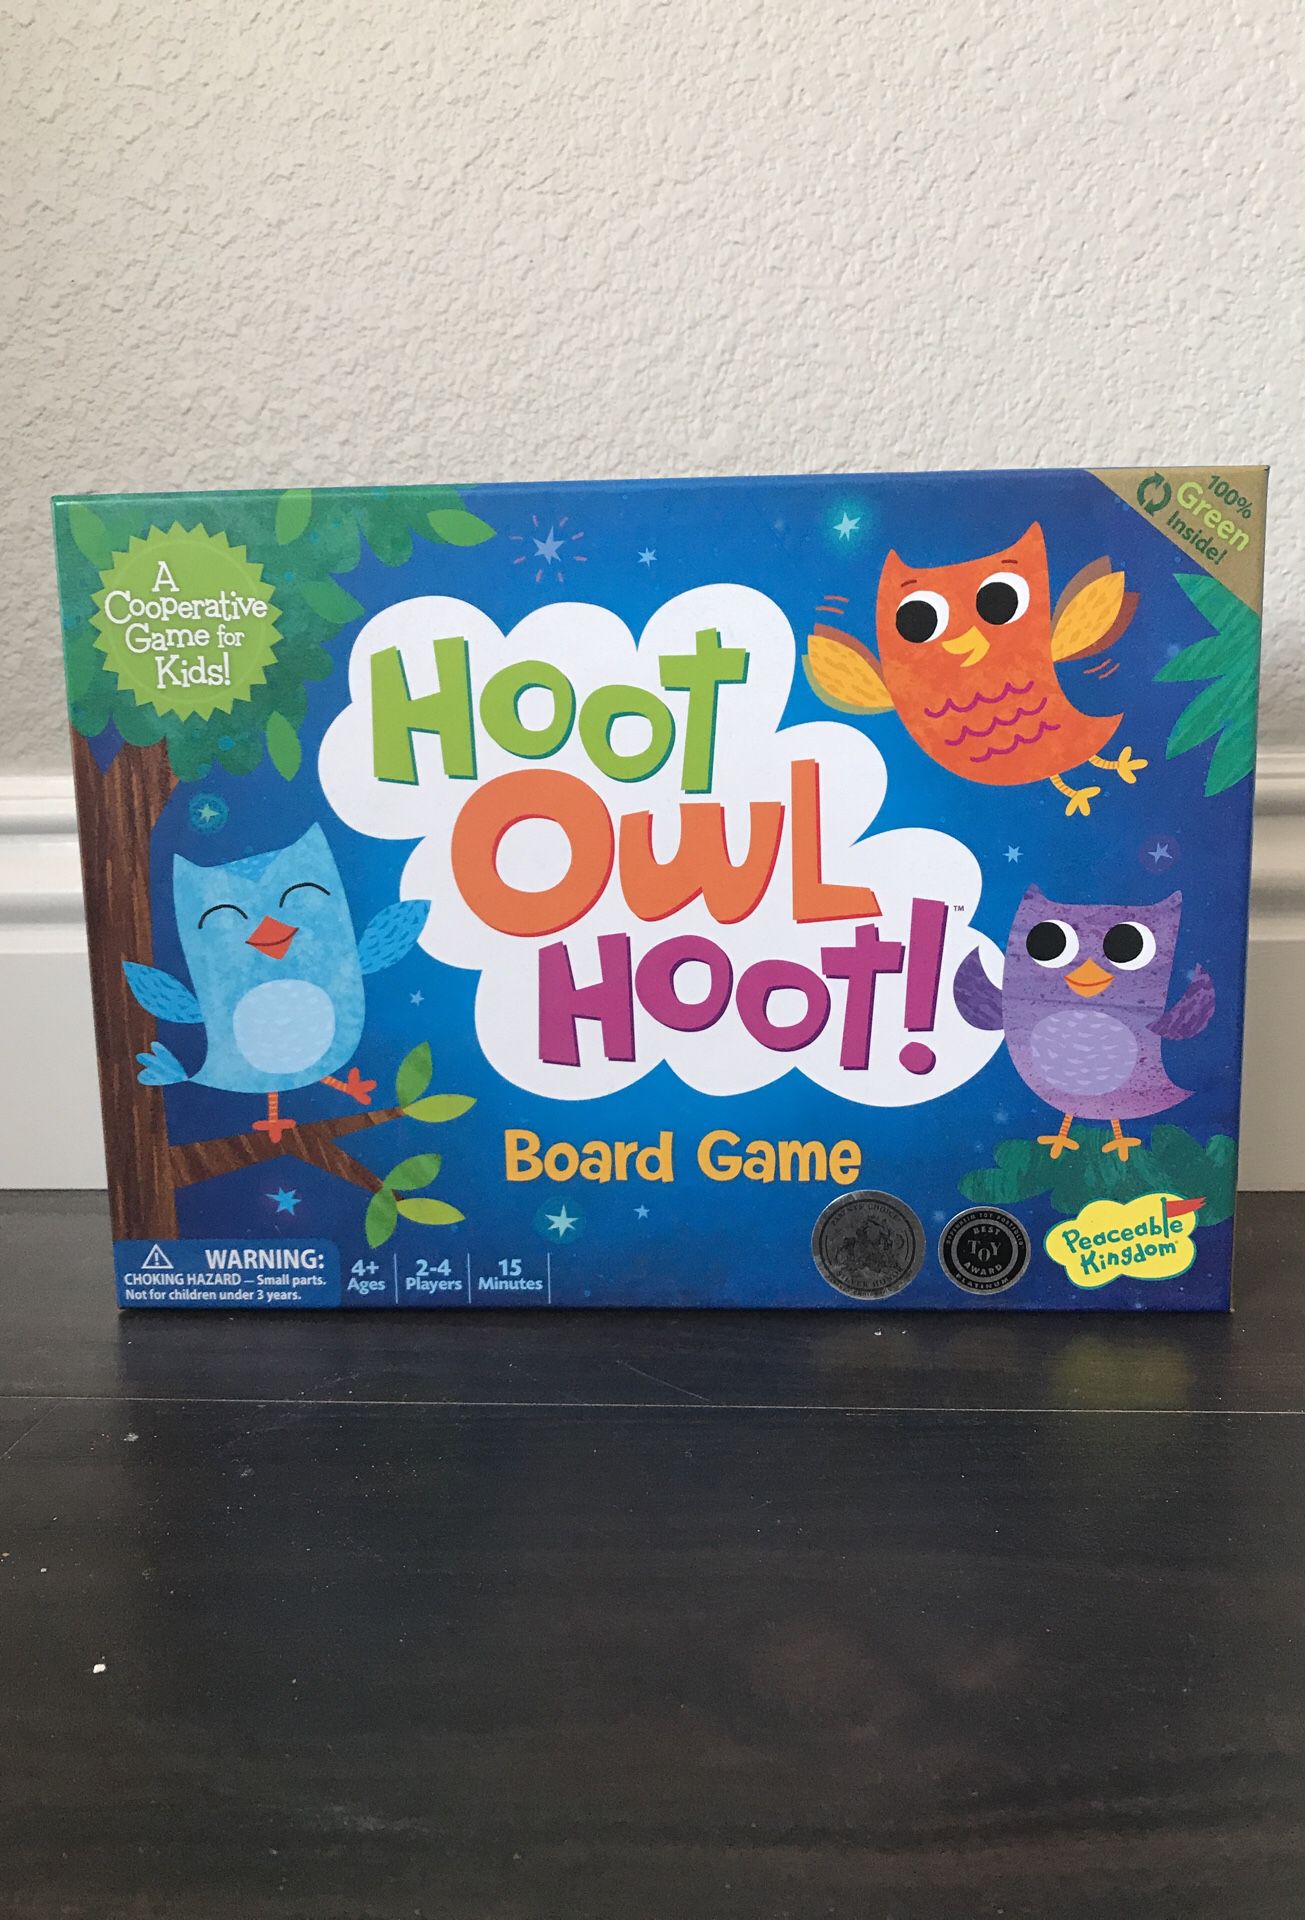 Hoot Owl Hoot board game.